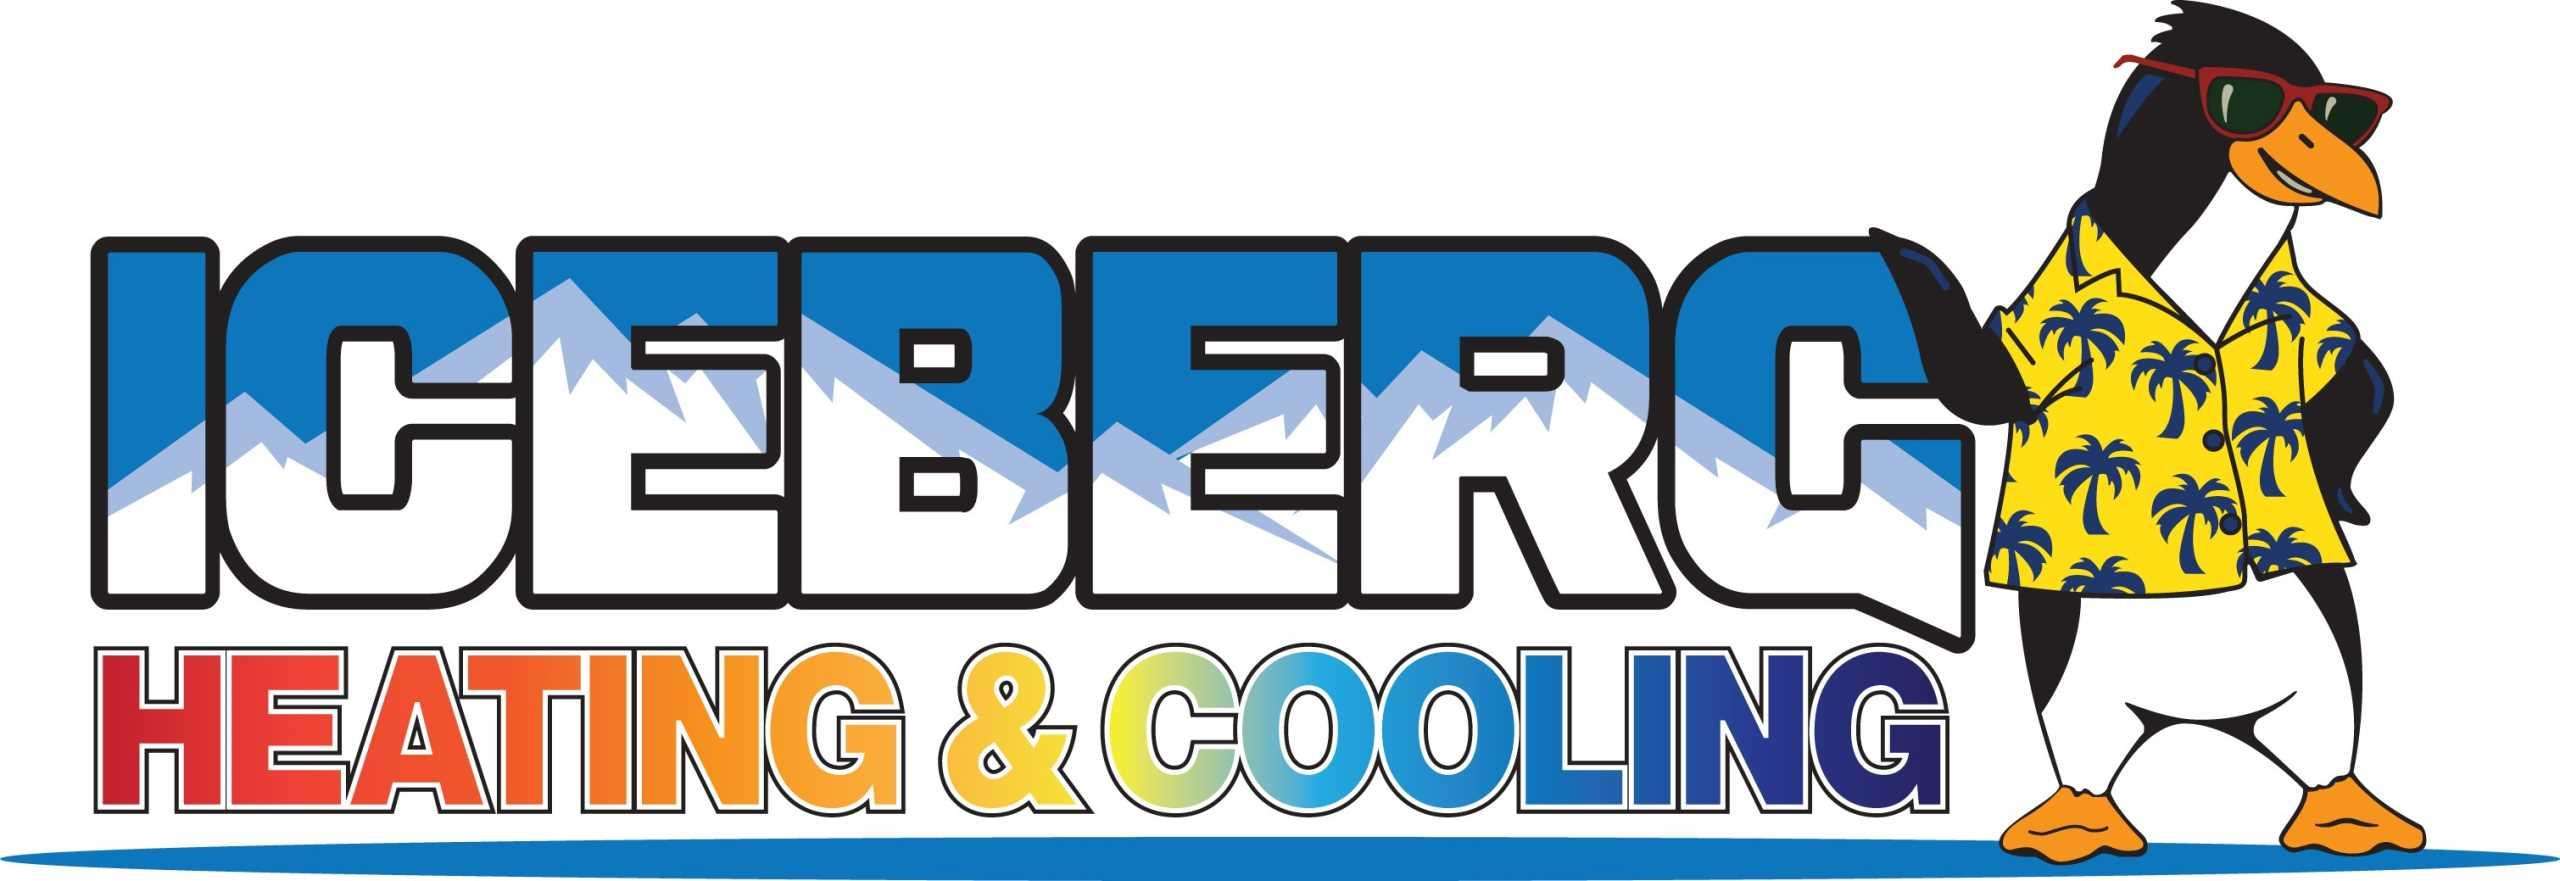 Iceberg Heating & Cooling Logo